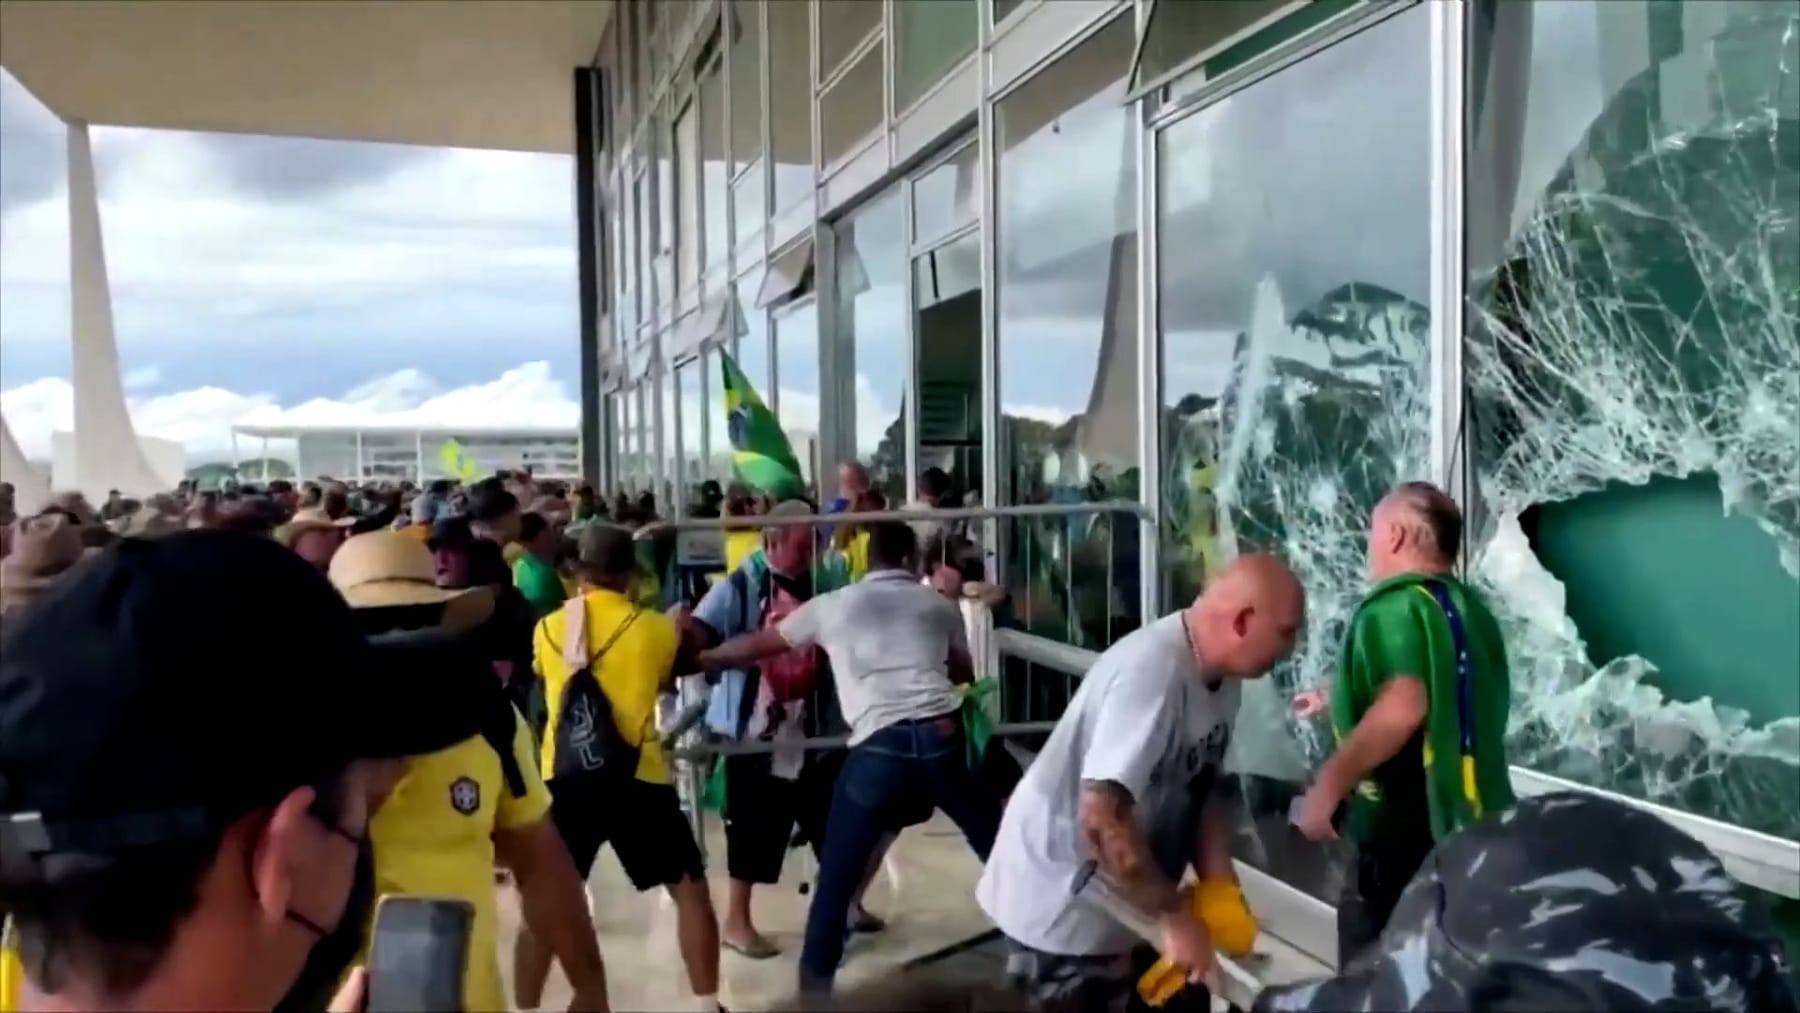 Bolsonaro in Florida: US politician Ocasio-Cortez demands expulsion